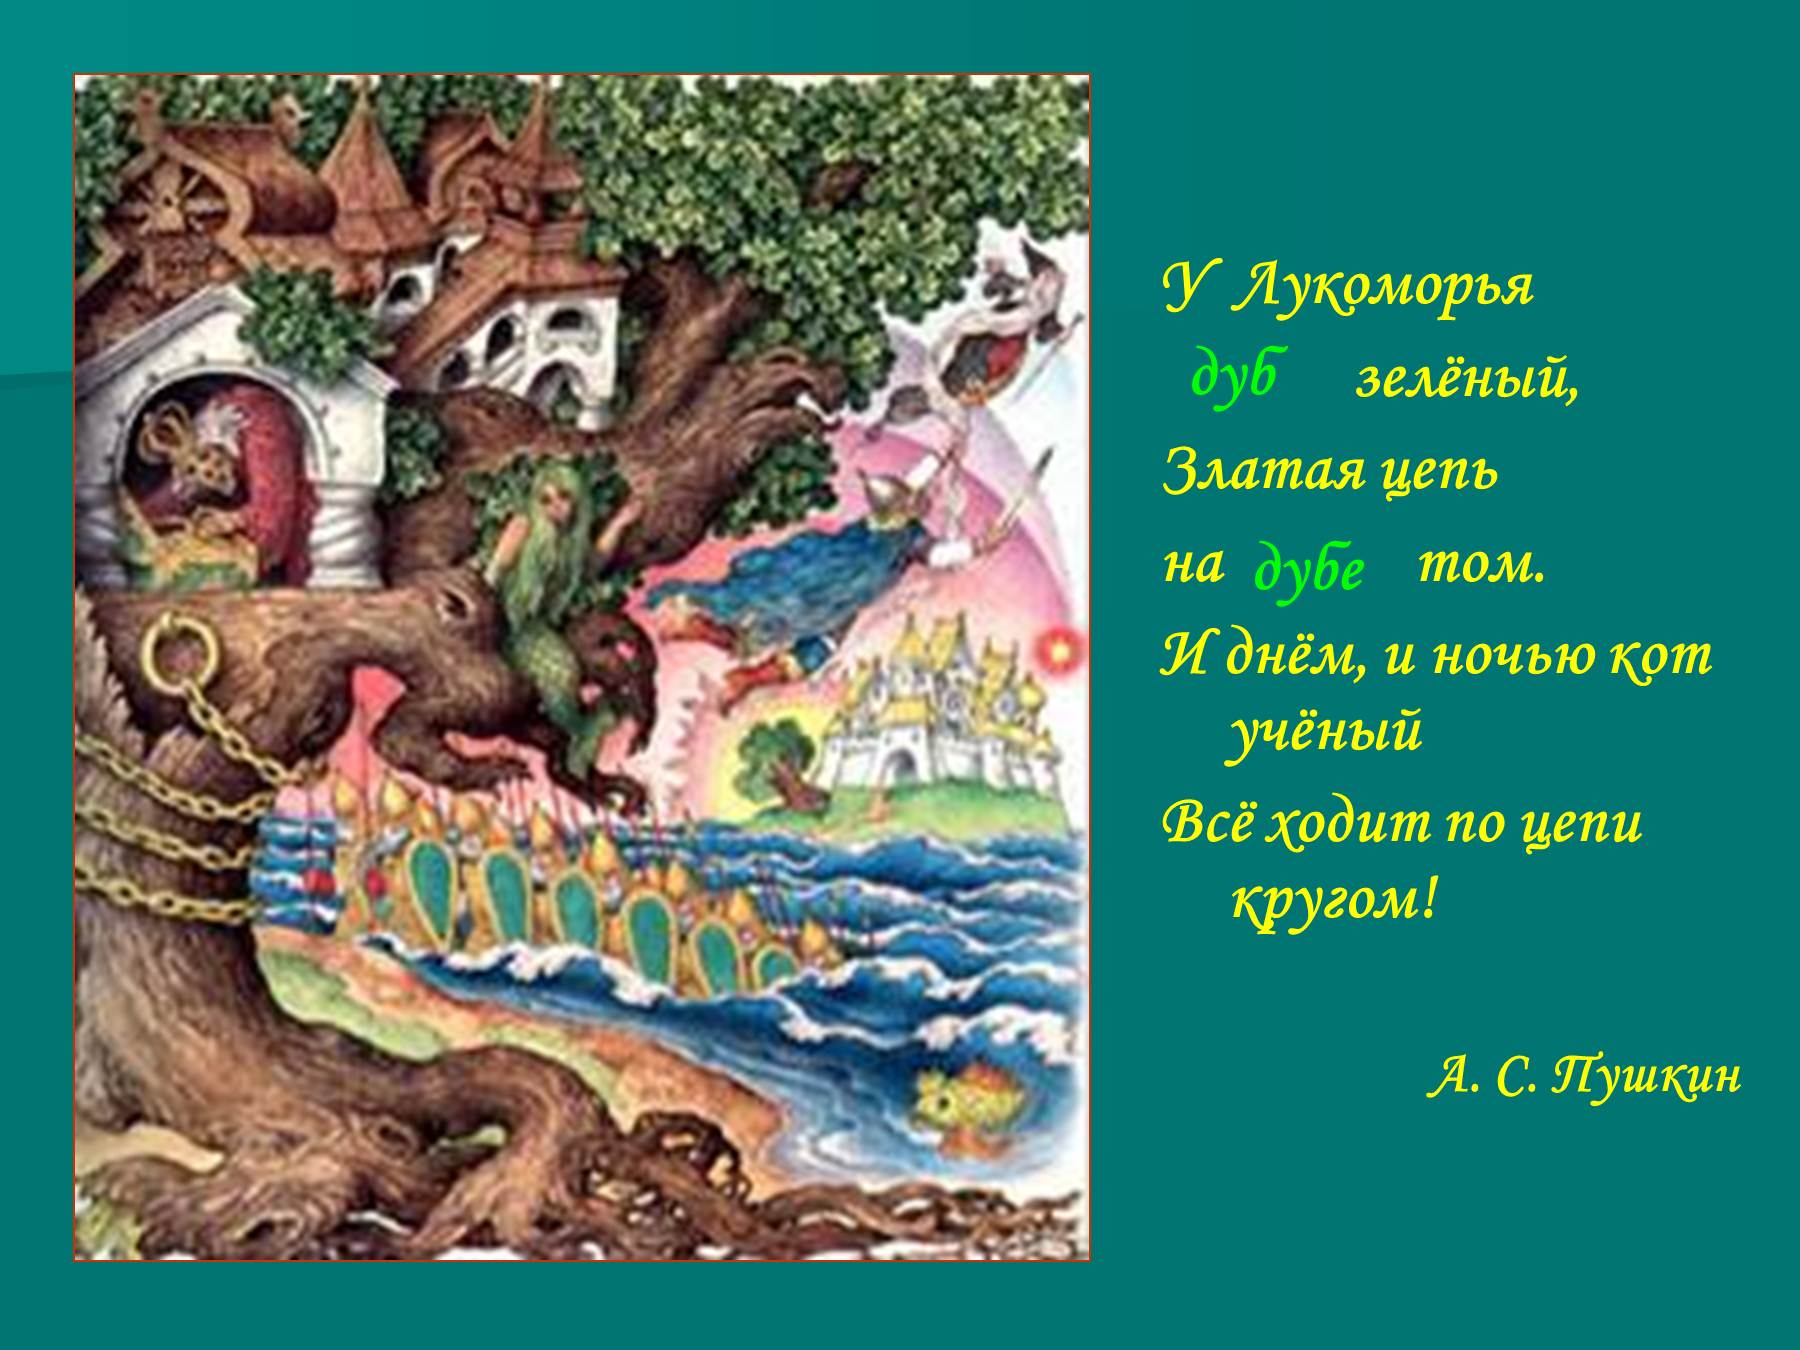 Кот на дубе Пушкин у Лукоморья дуб зеленый златая